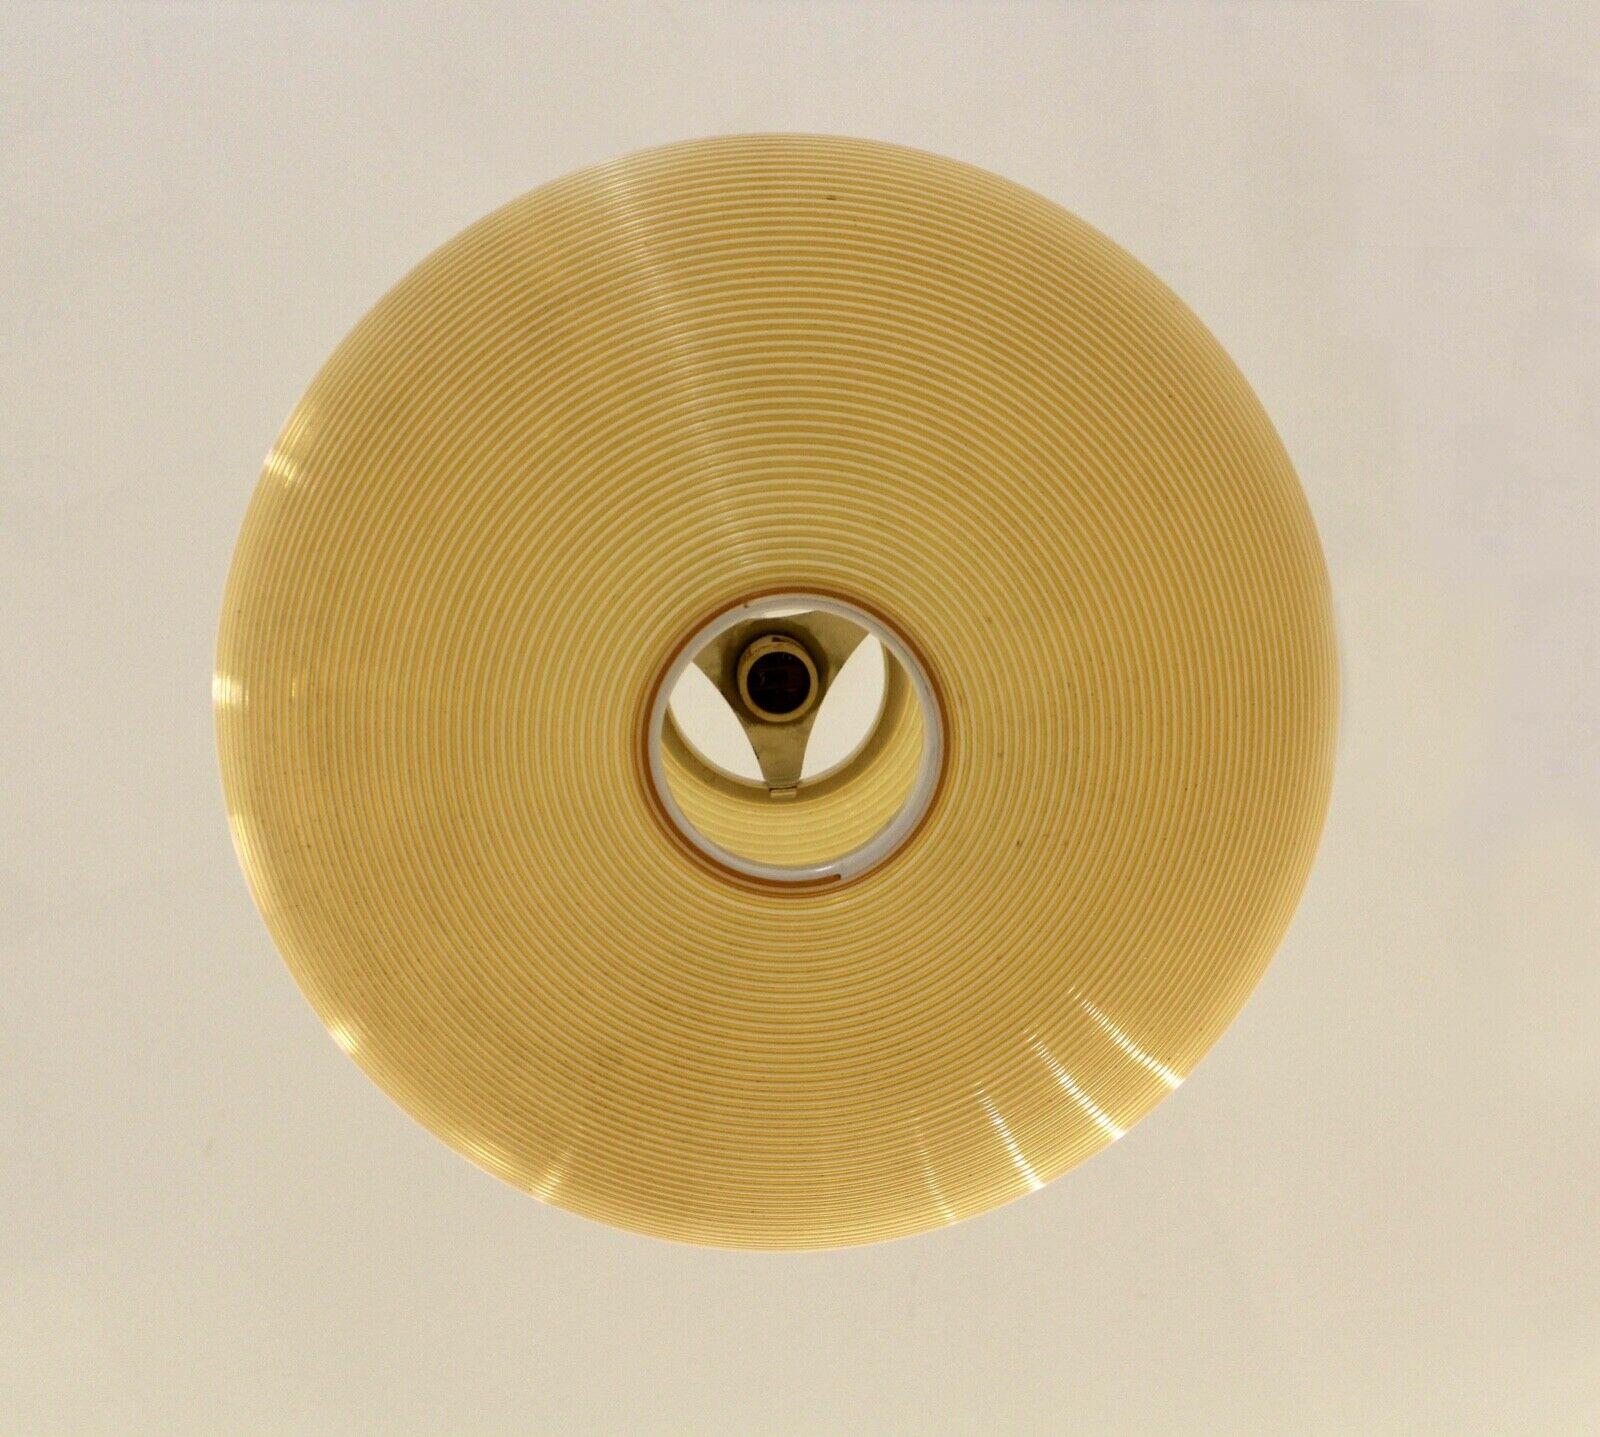 Mid-Century Modern ABS Spun Plastic Ceiling Light by Yasha Heifetz for Heifetz Rotaflex, Germany